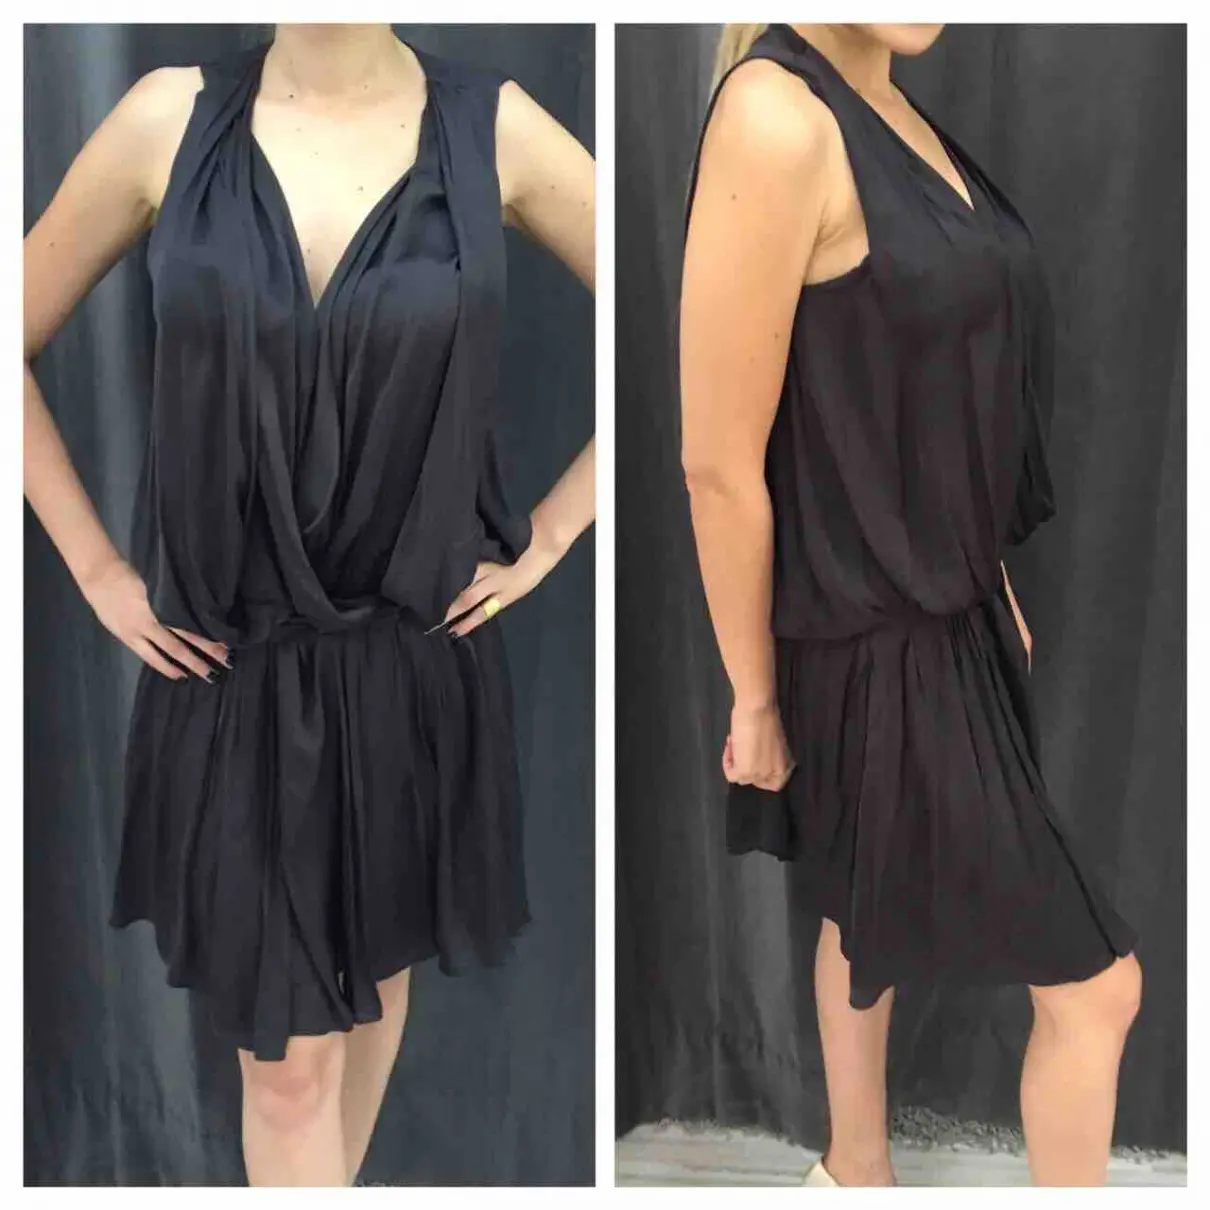 Buy Alexander Wang Mid-length dress online